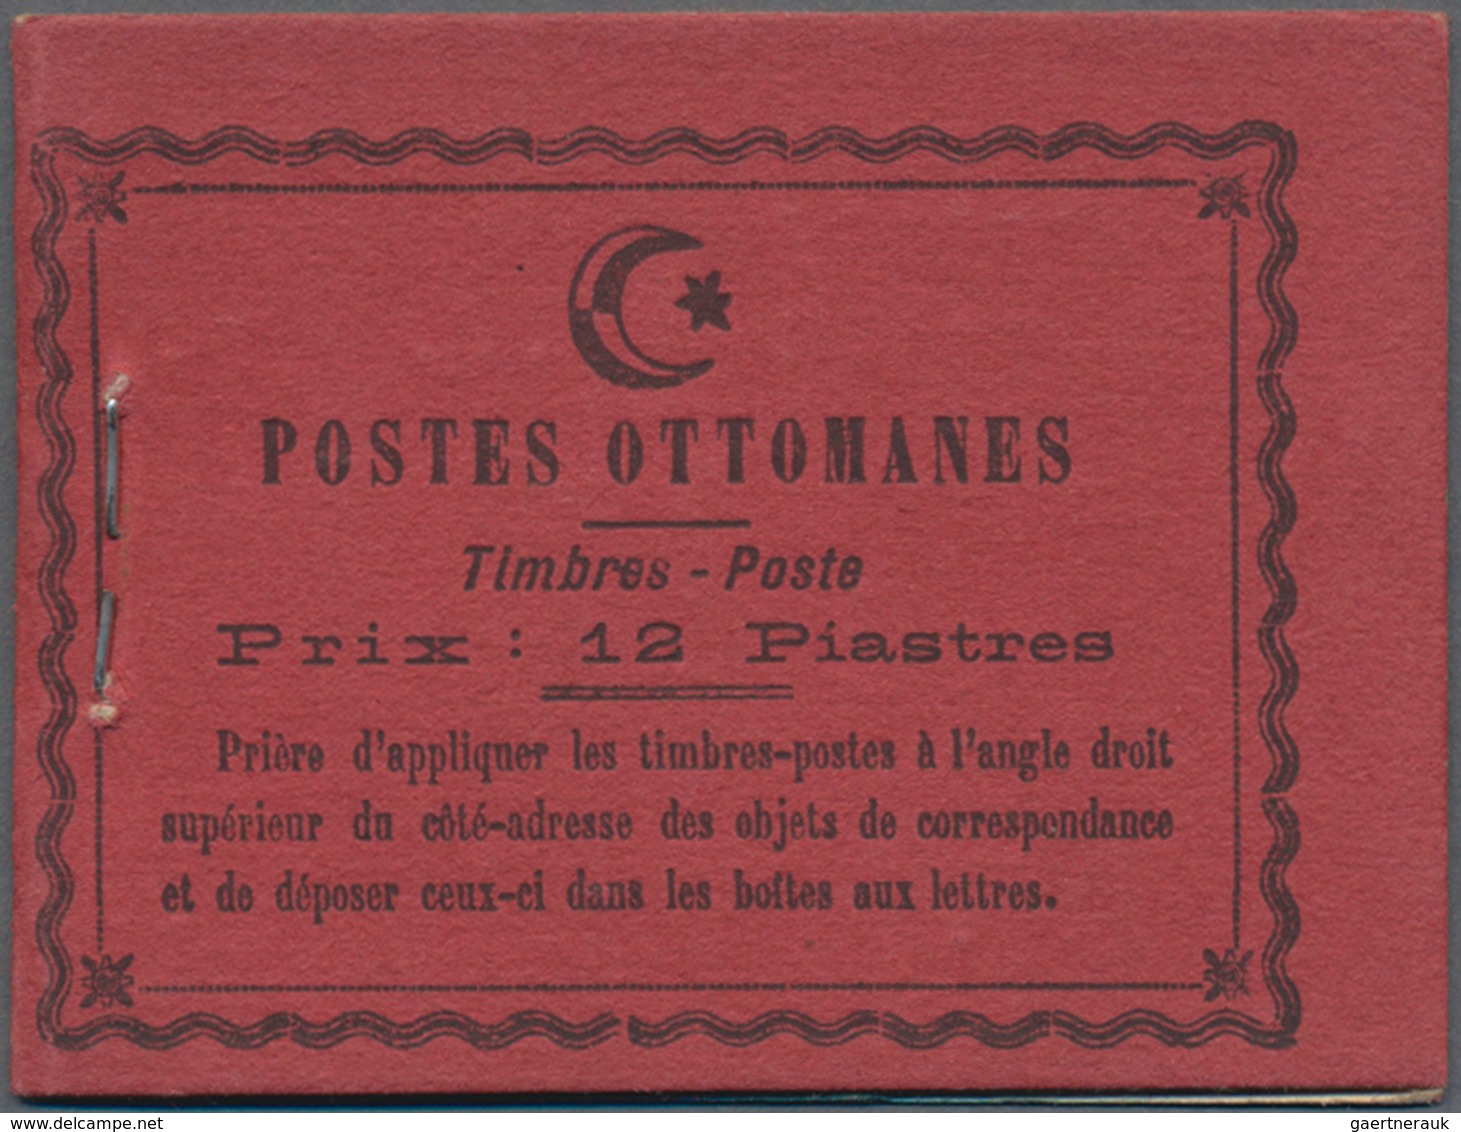 Türkei - Markenheftchen: 1913, Definitives "G.P.O. Constatinople", Set Of Three Unexploded Booklets: - Booklets